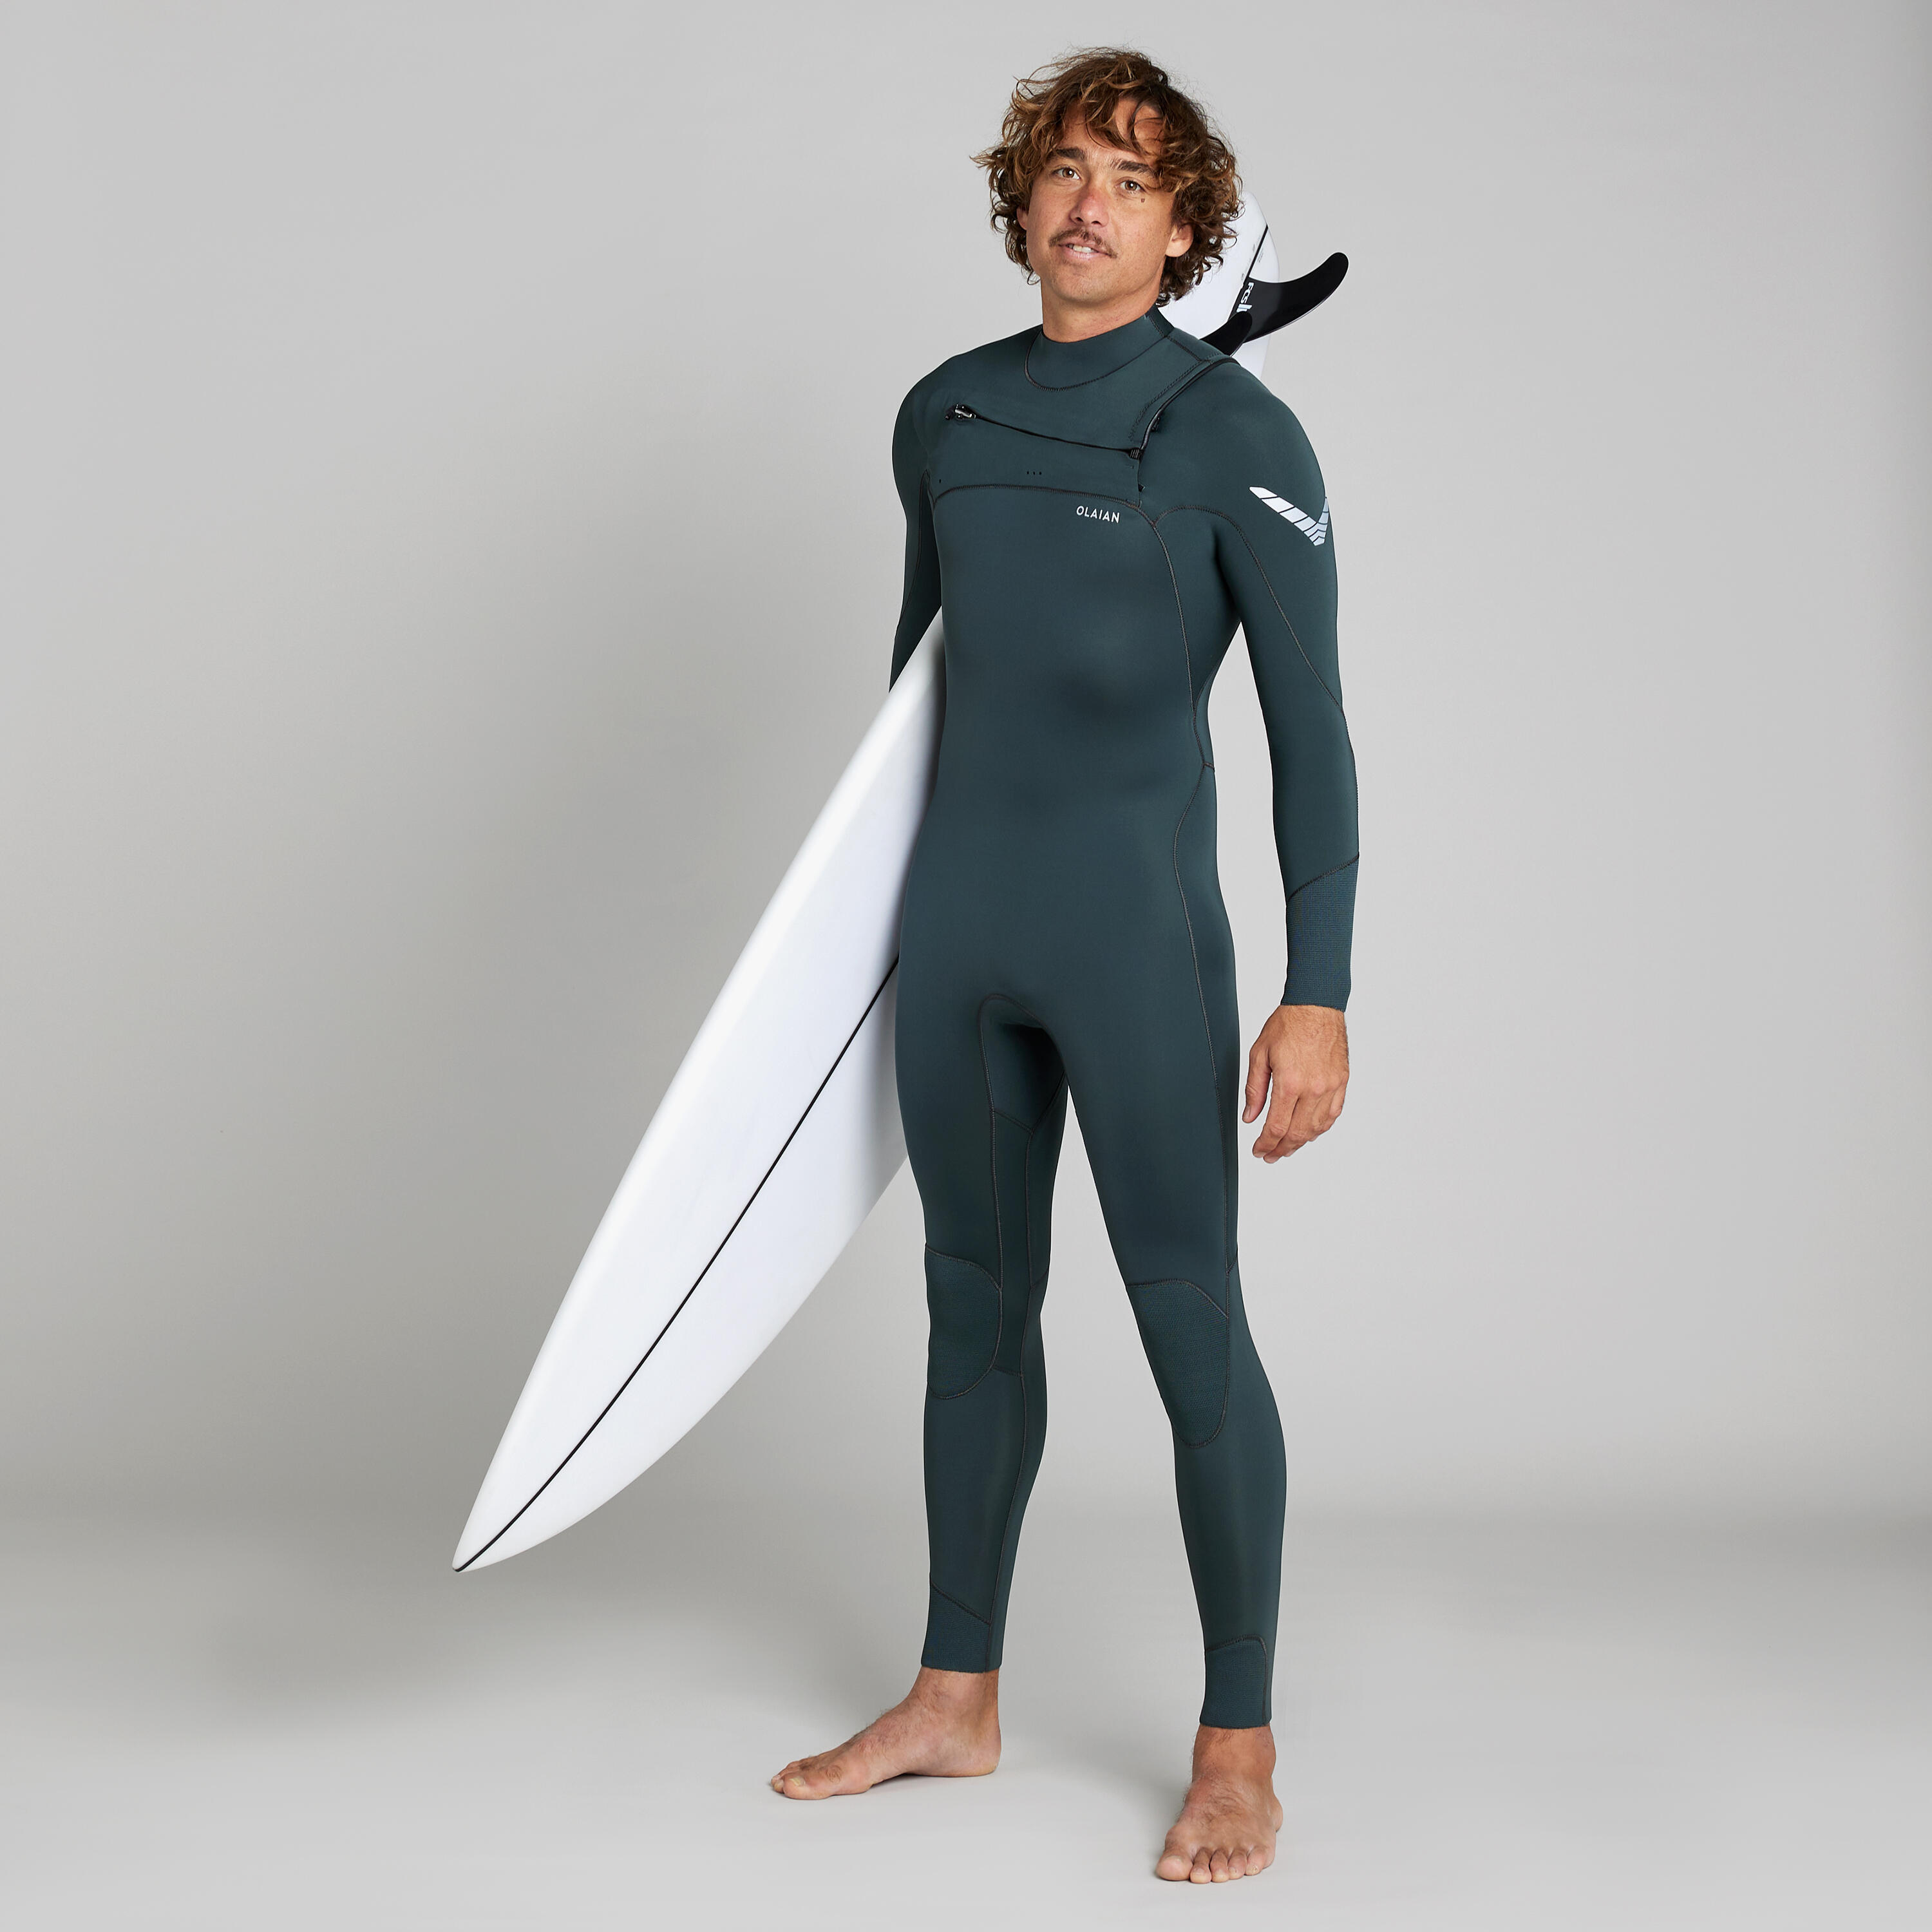 OLAIAN Neoprenanzug Surfen Herren 900 3/2 mm dunkelgrün L